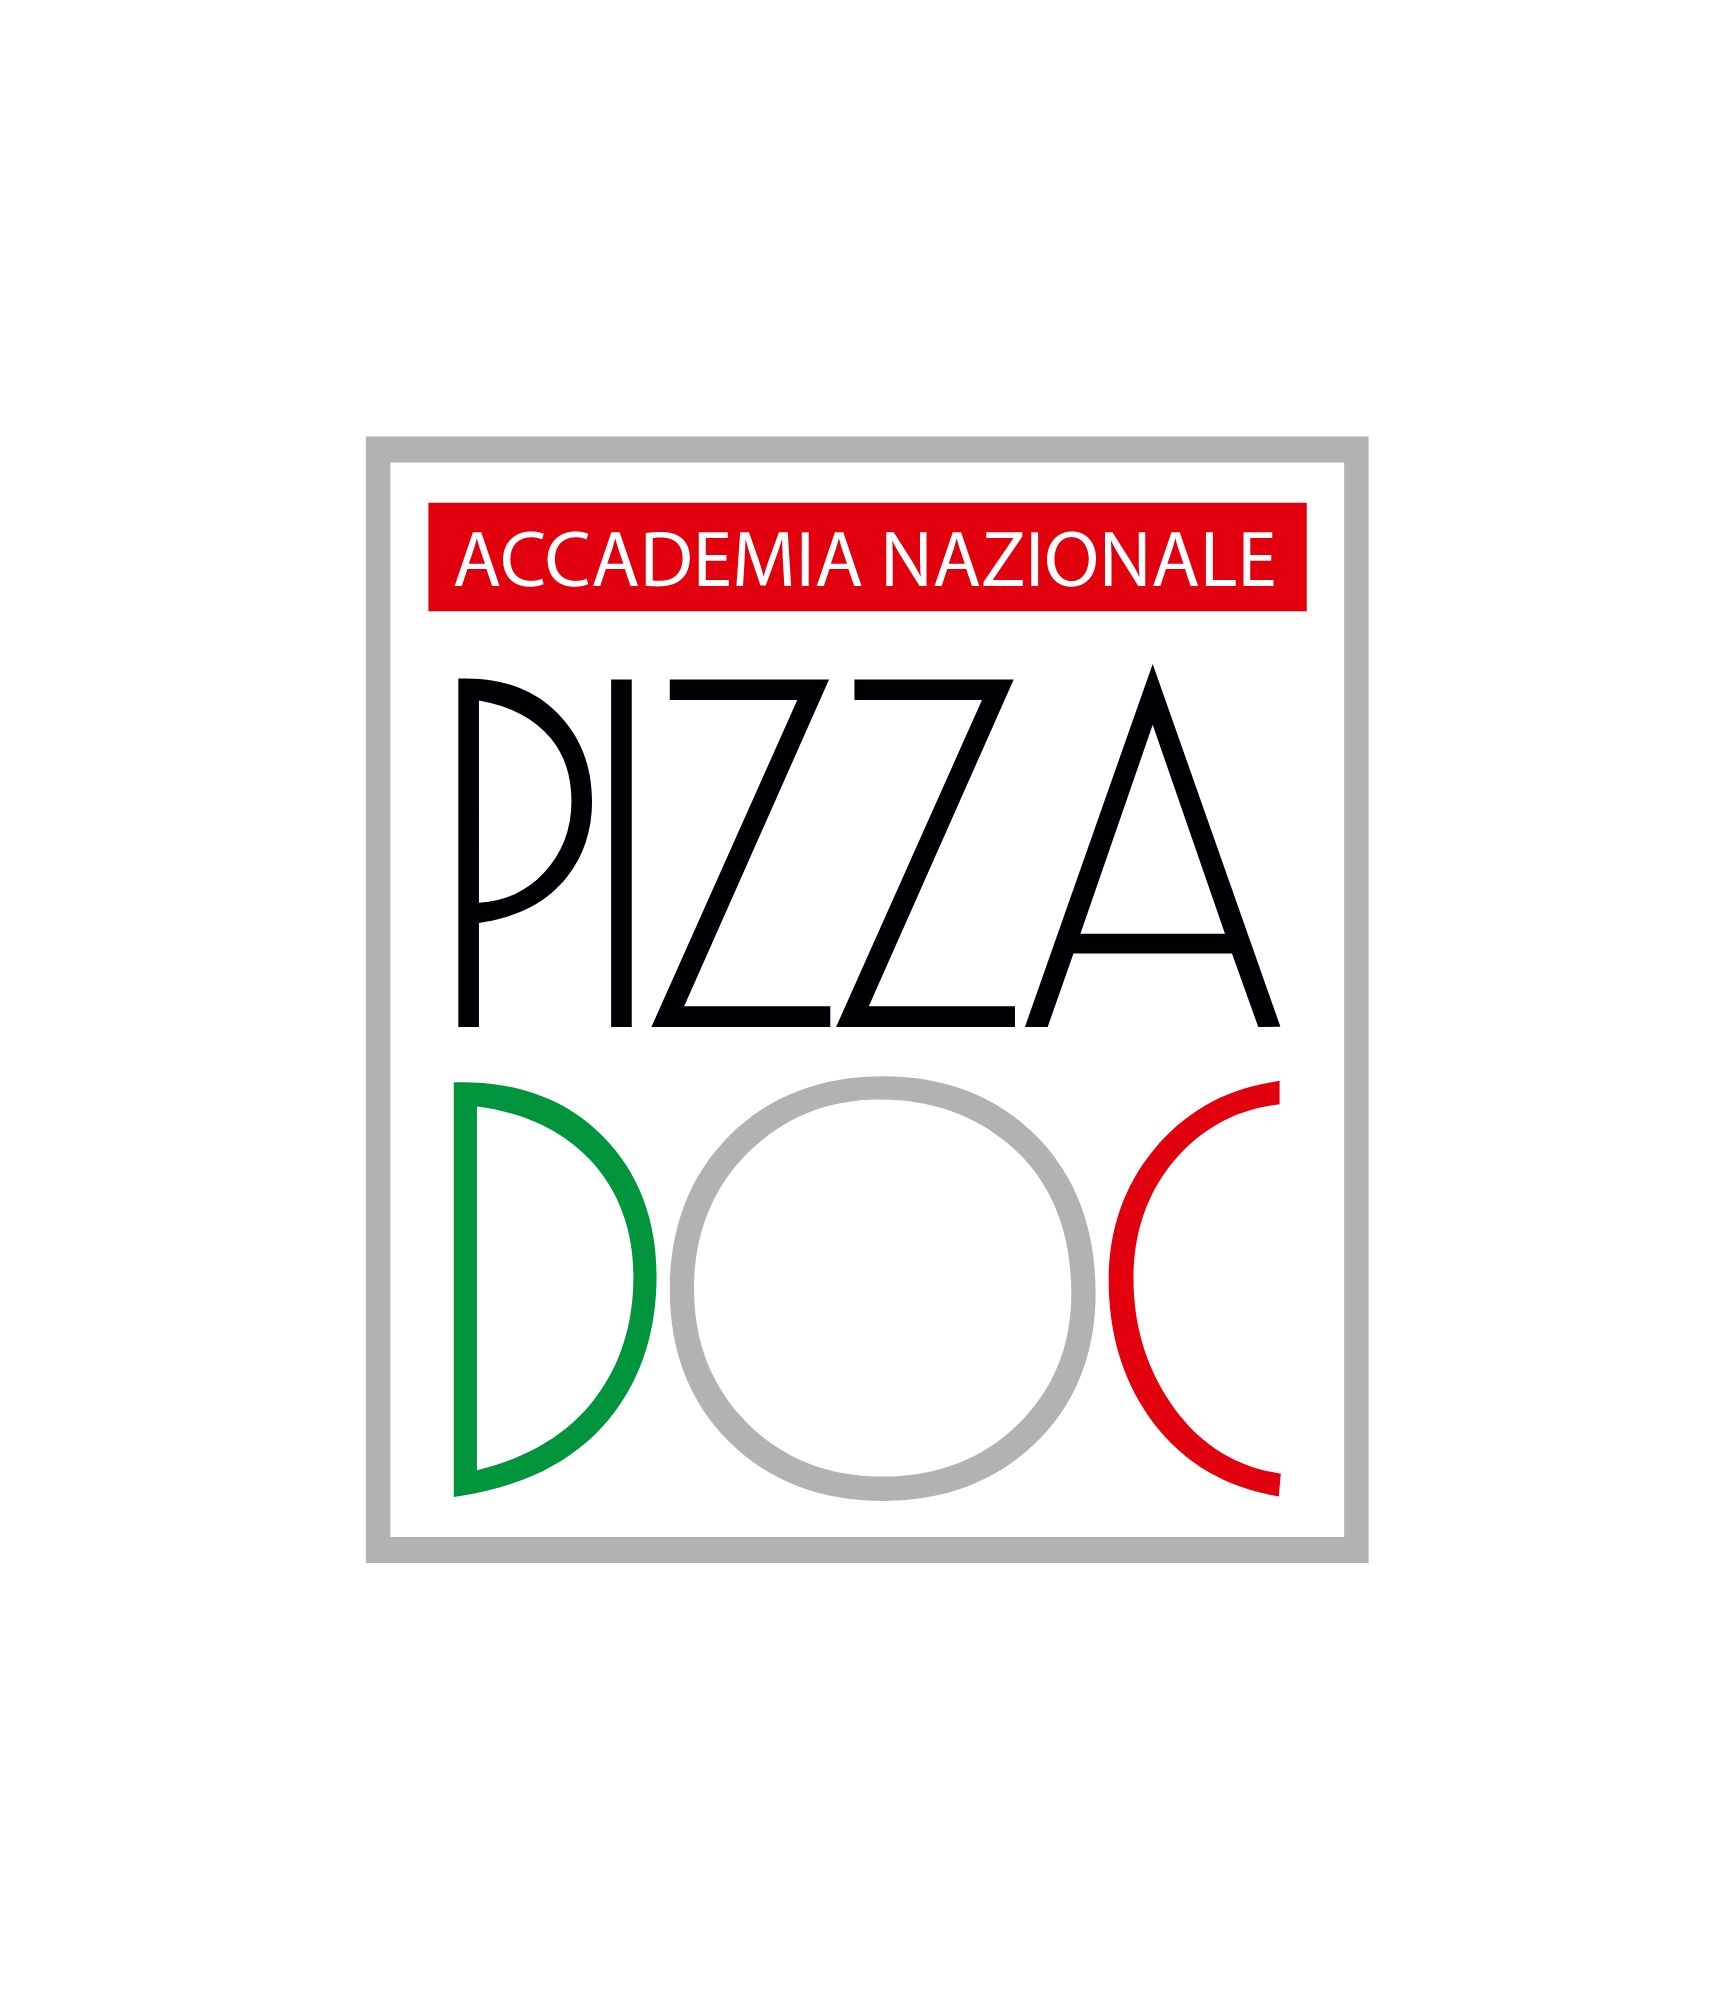 logo pizza doc